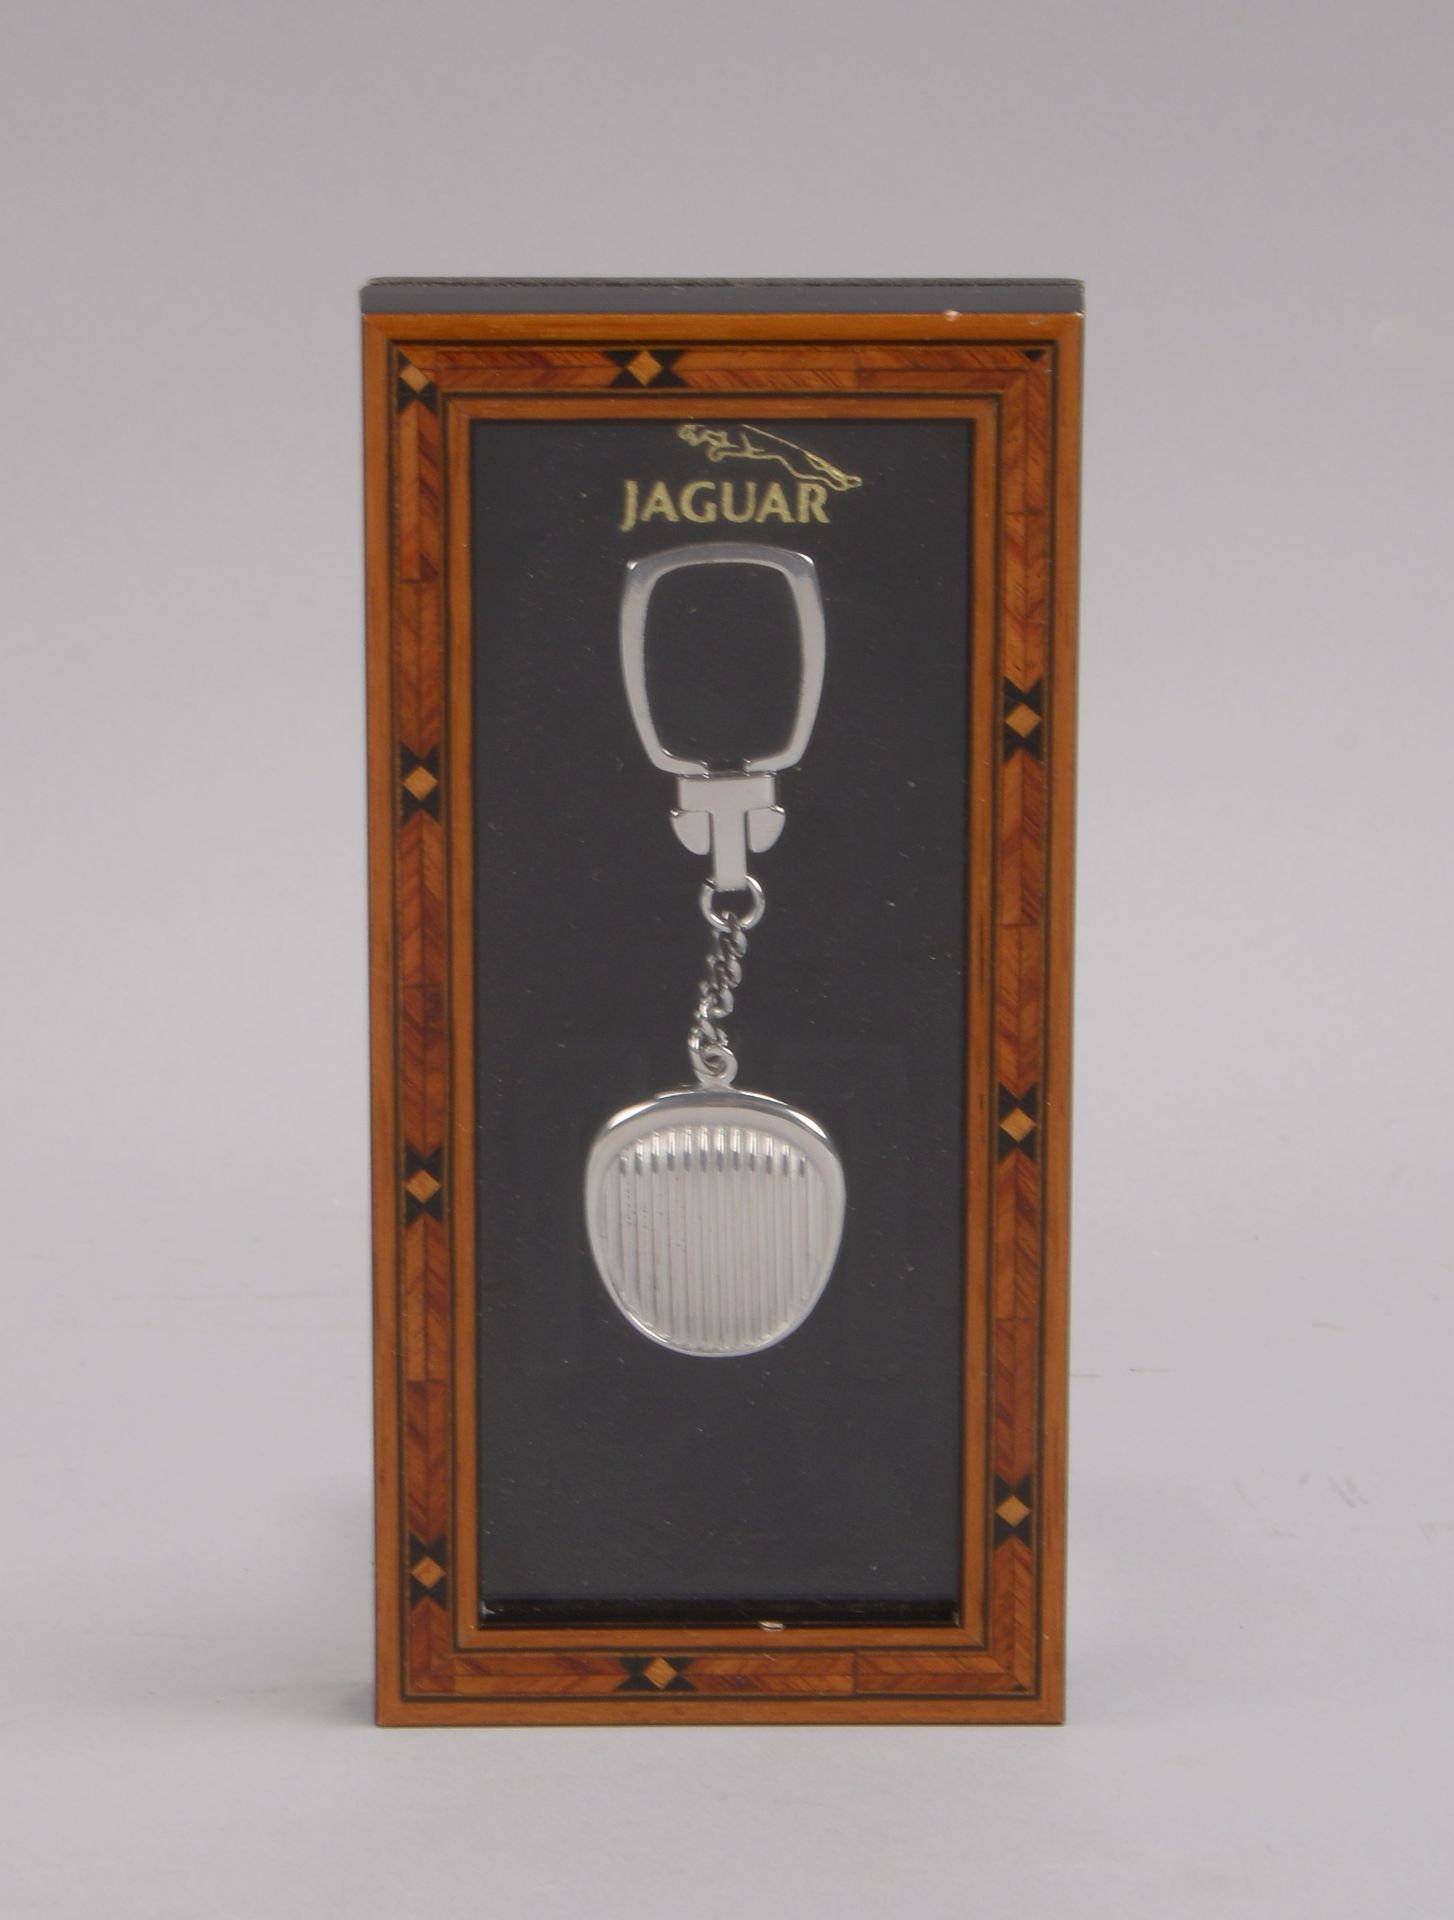 Sammlerstück: original 'Jaguar'-Schlüsselanhänger, Sterlingsilber, im Etui - neuwertig/unbenutzt